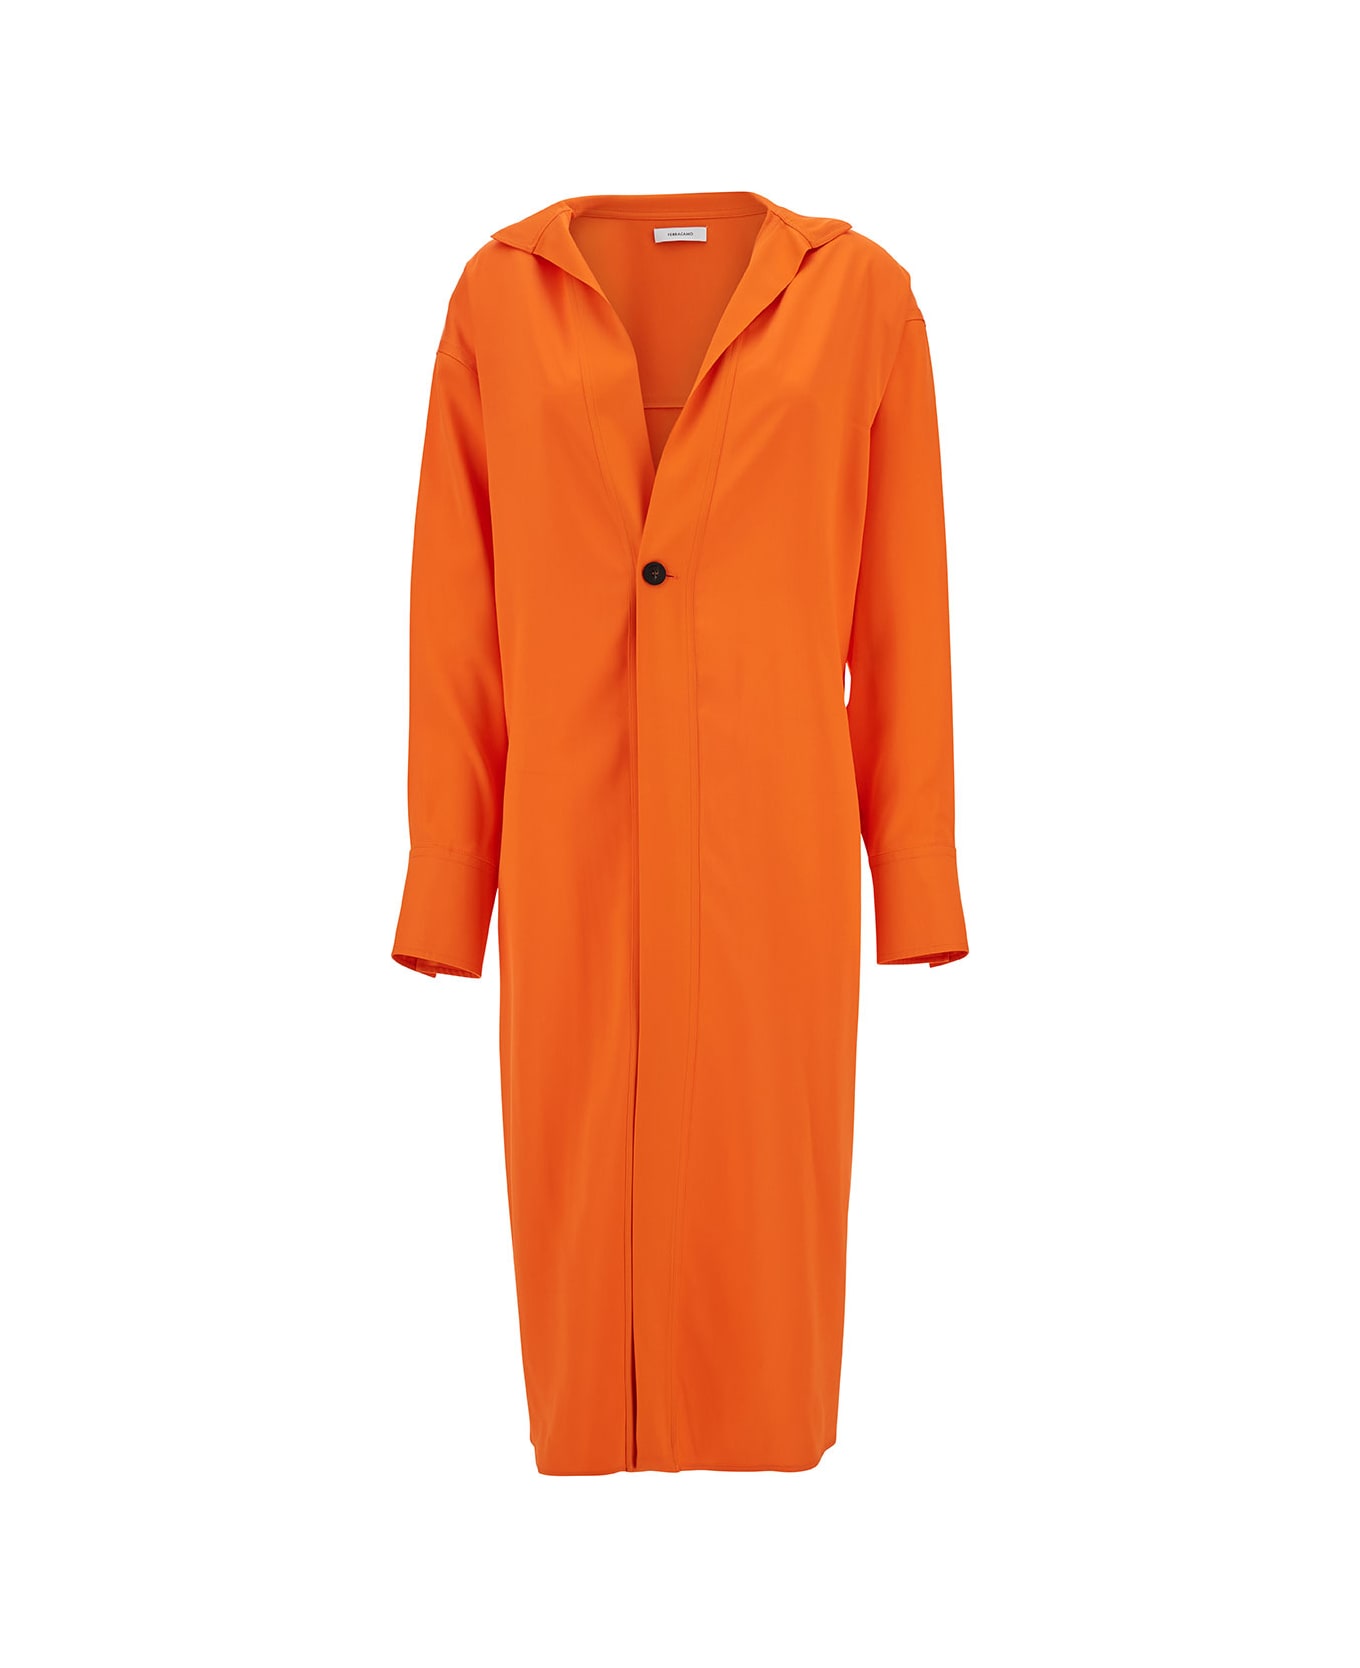 Ferragamo Orange Single-breasted Coat With A Single Button In Stretch Viscose Blend Woman - Orange